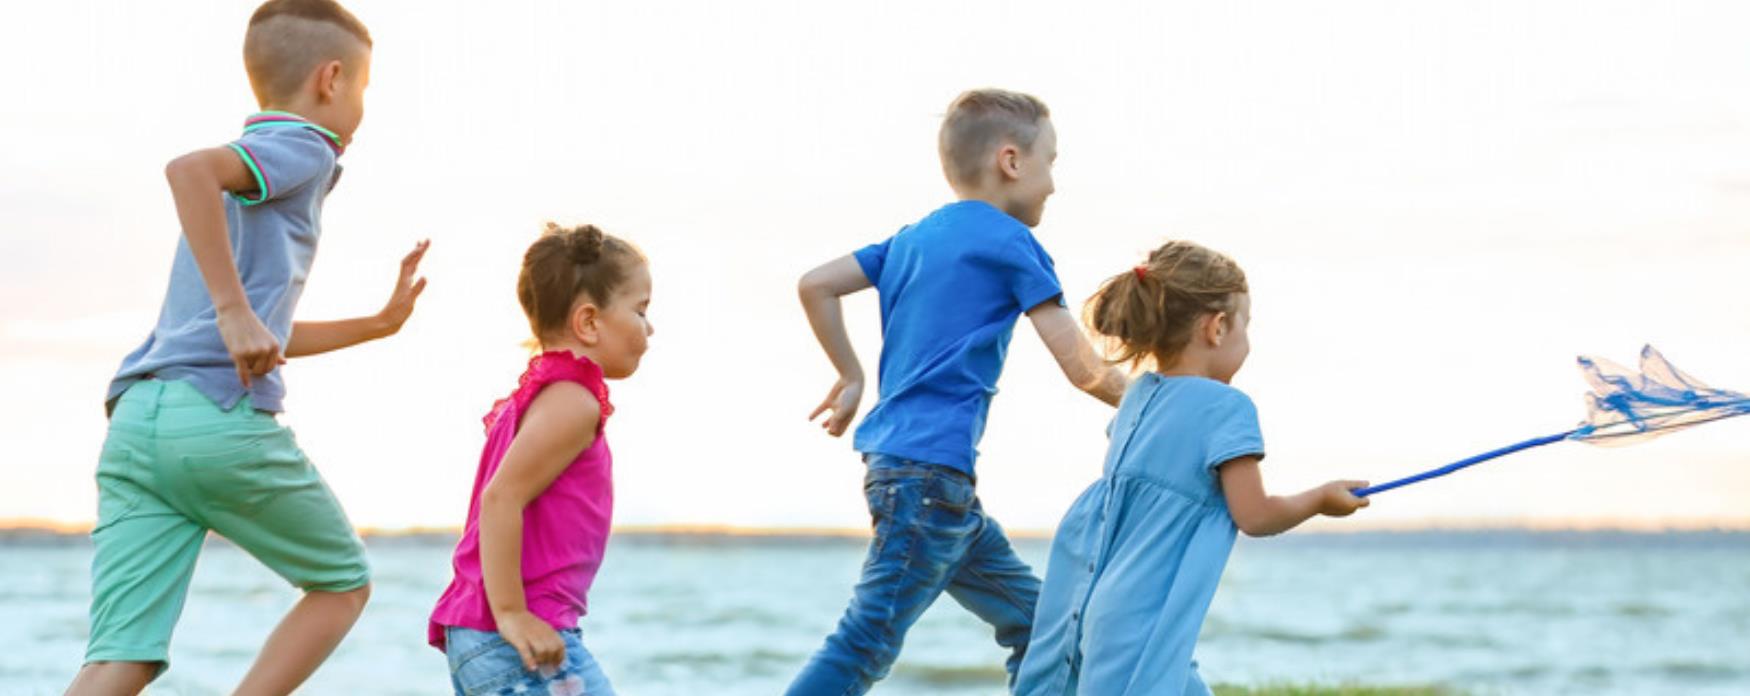 Children running towards a beach looking happy